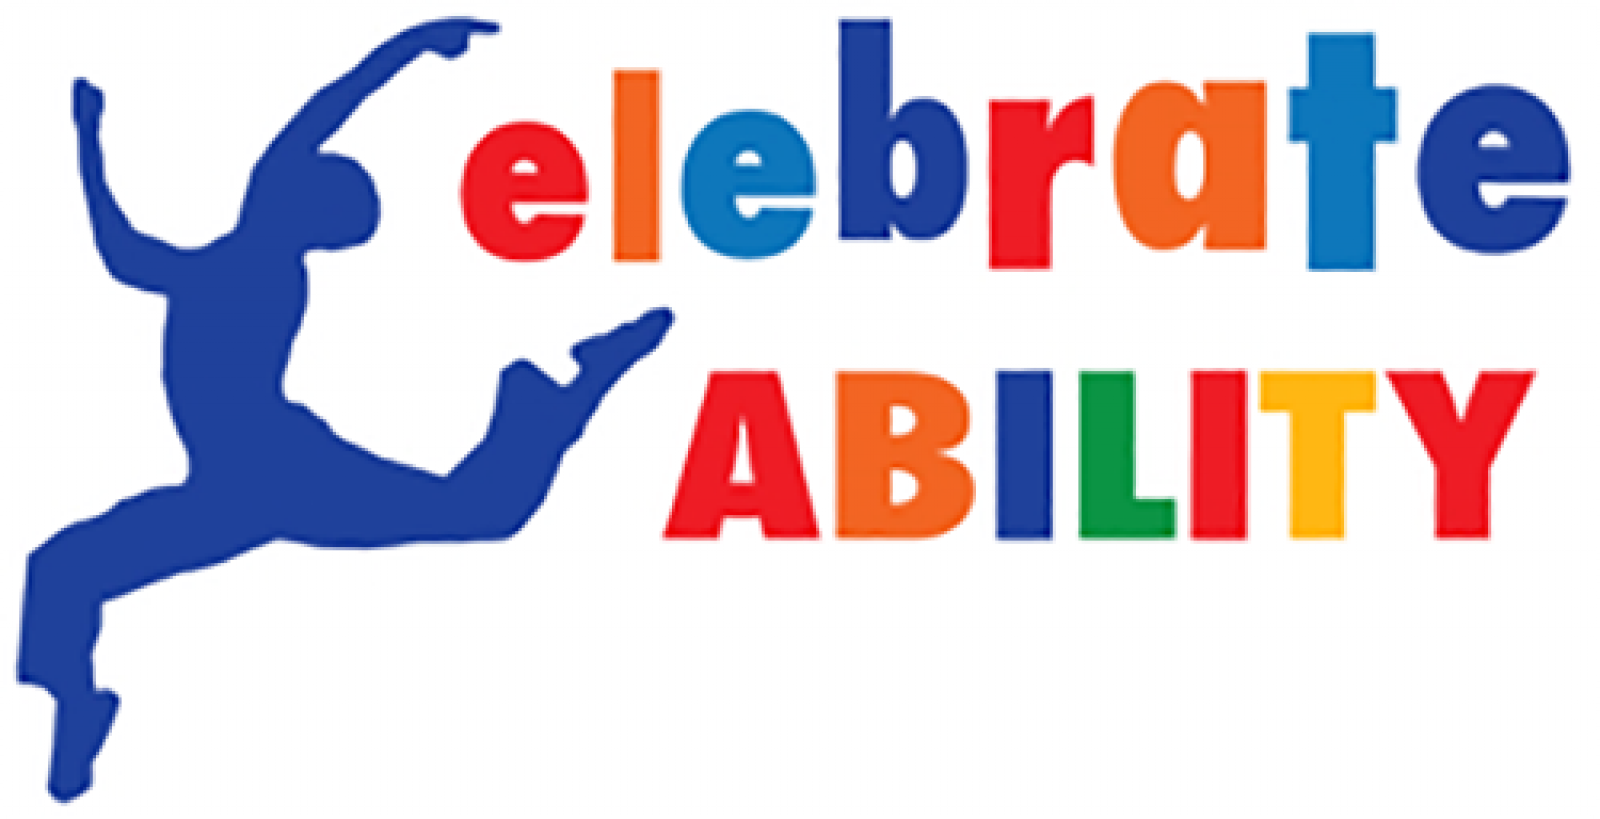 Celebrate Ability